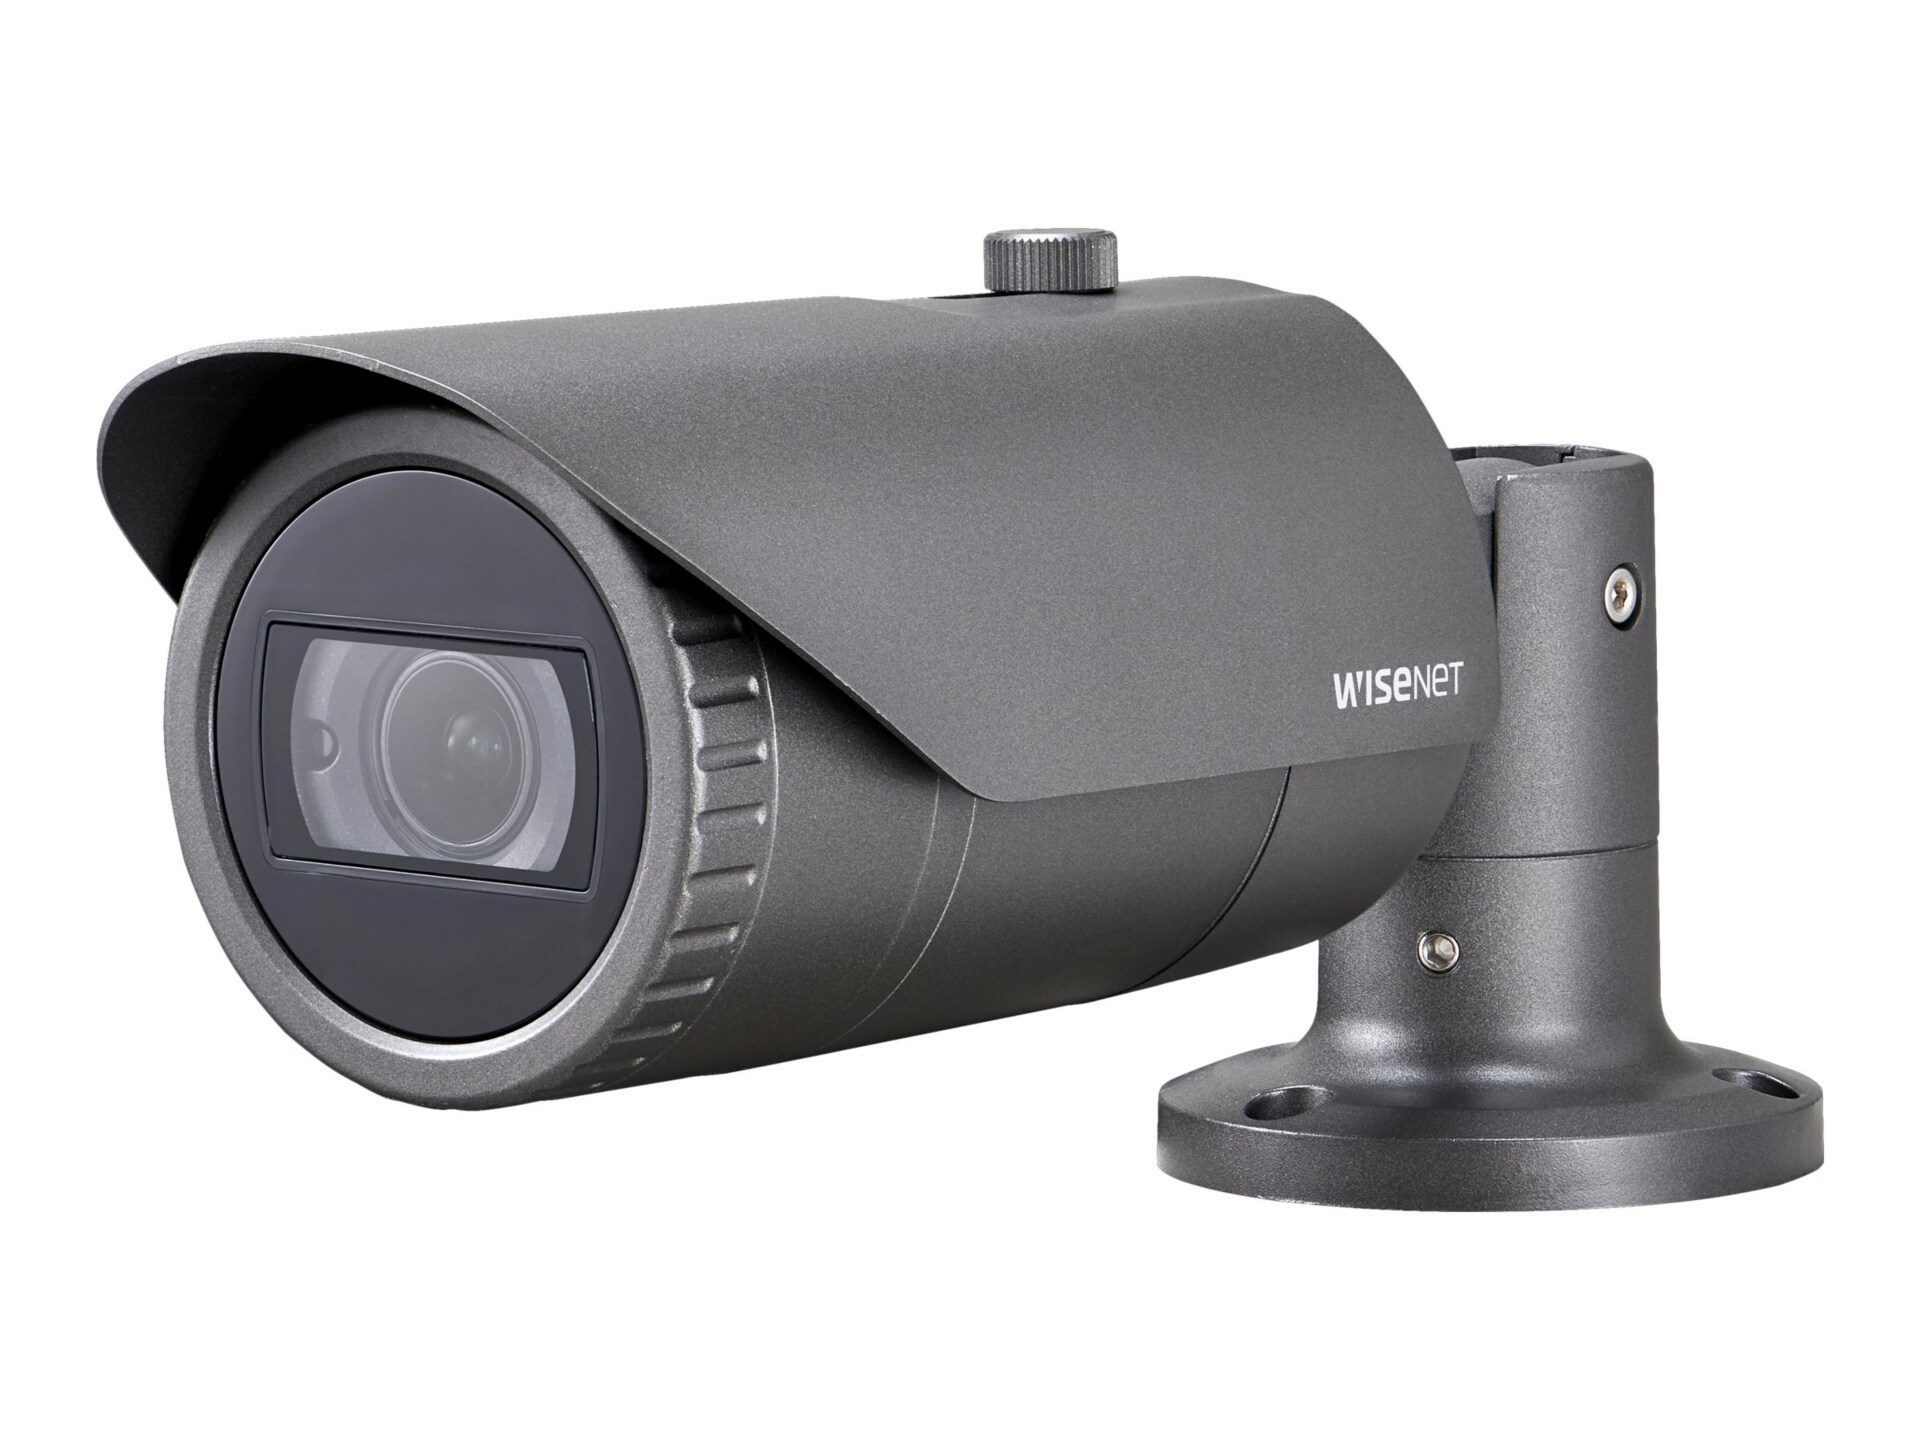 Samsung WiseNet HD+ HCO-7070R - surveillance camera